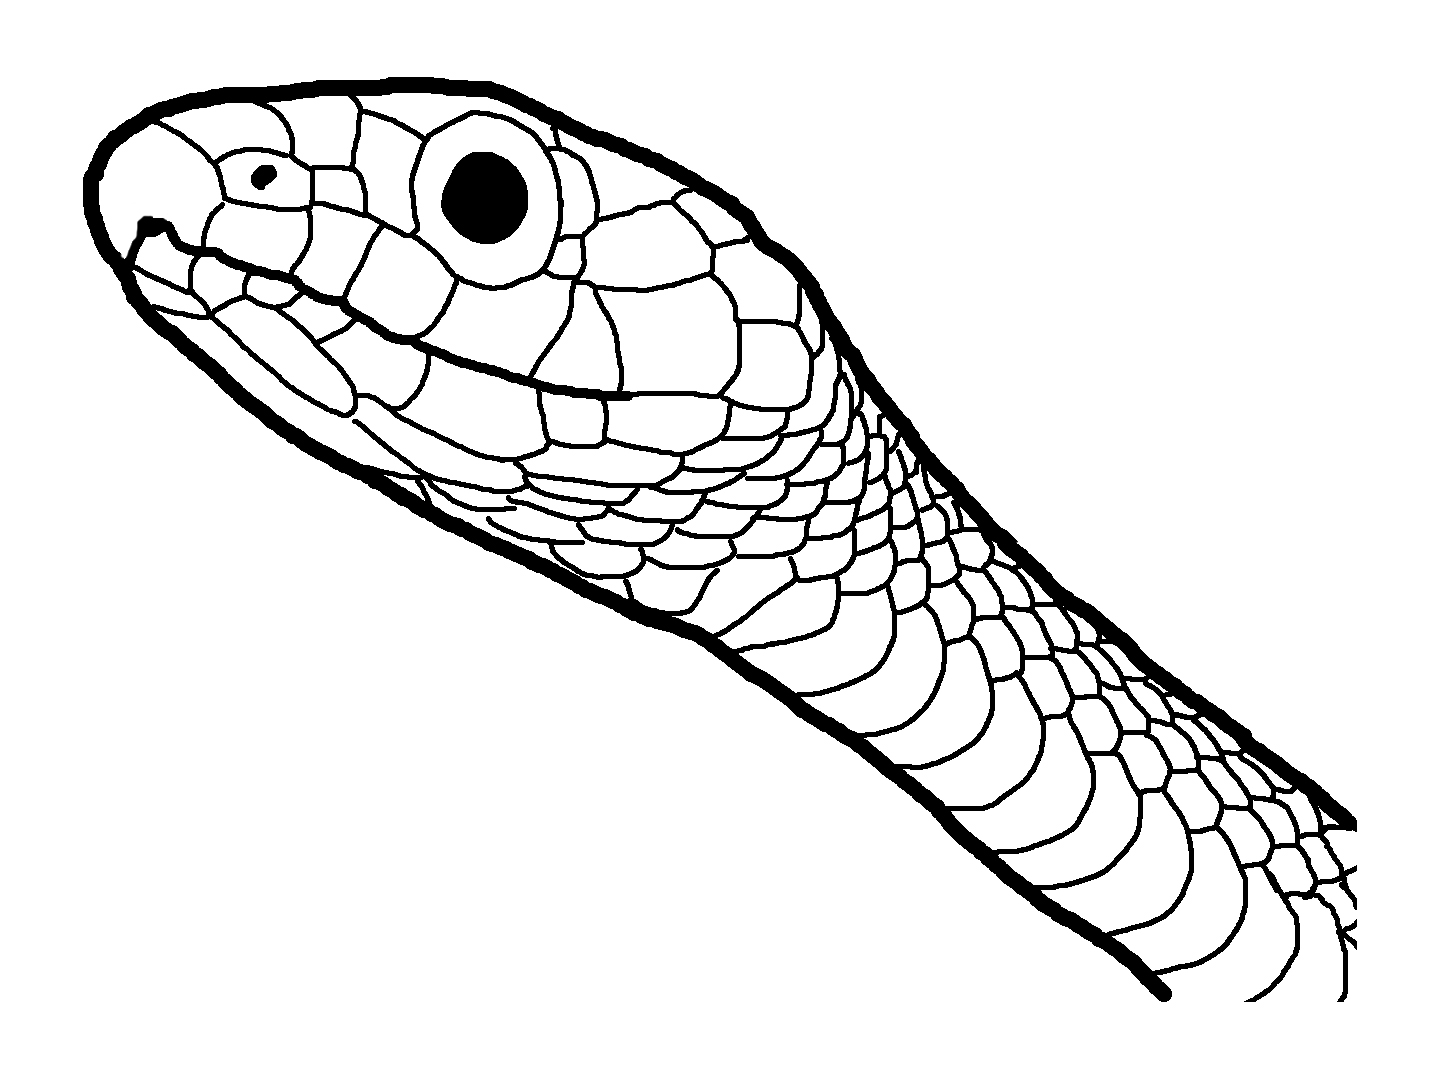 Tiger Snake coloring #8, Download drawings